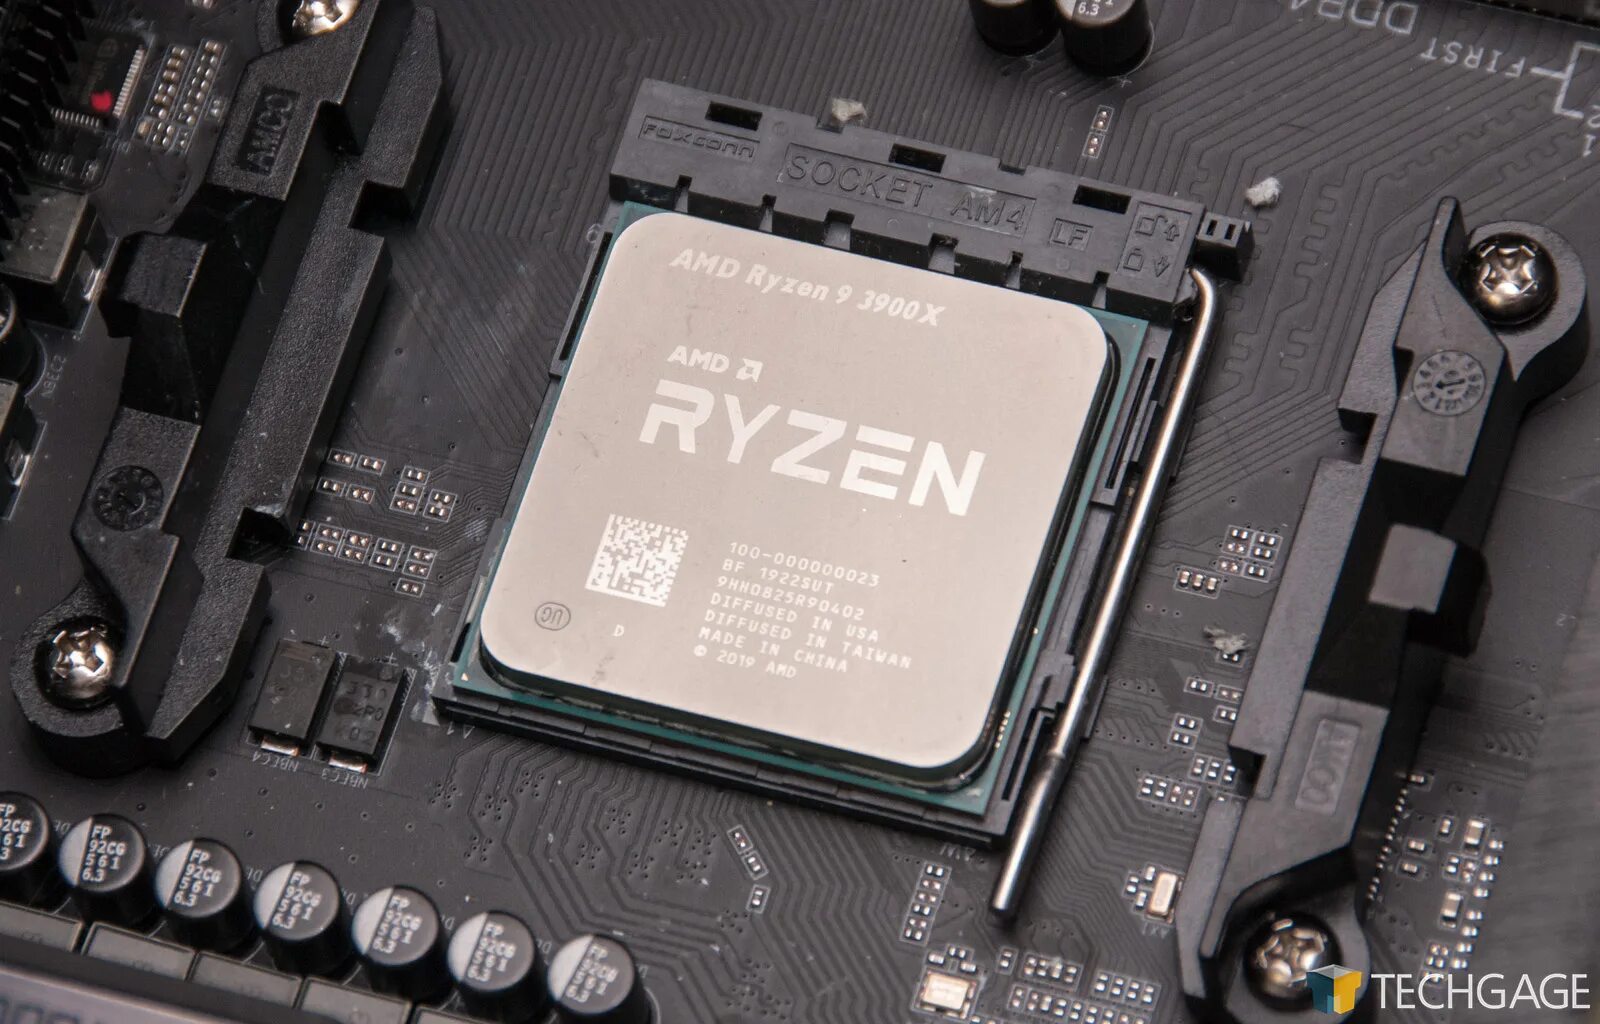 Ryzen 3700x. AMD Ryzen 7 3700x. AMD Ryzen 7 3700x 8-Core Processor. R7 3700x.